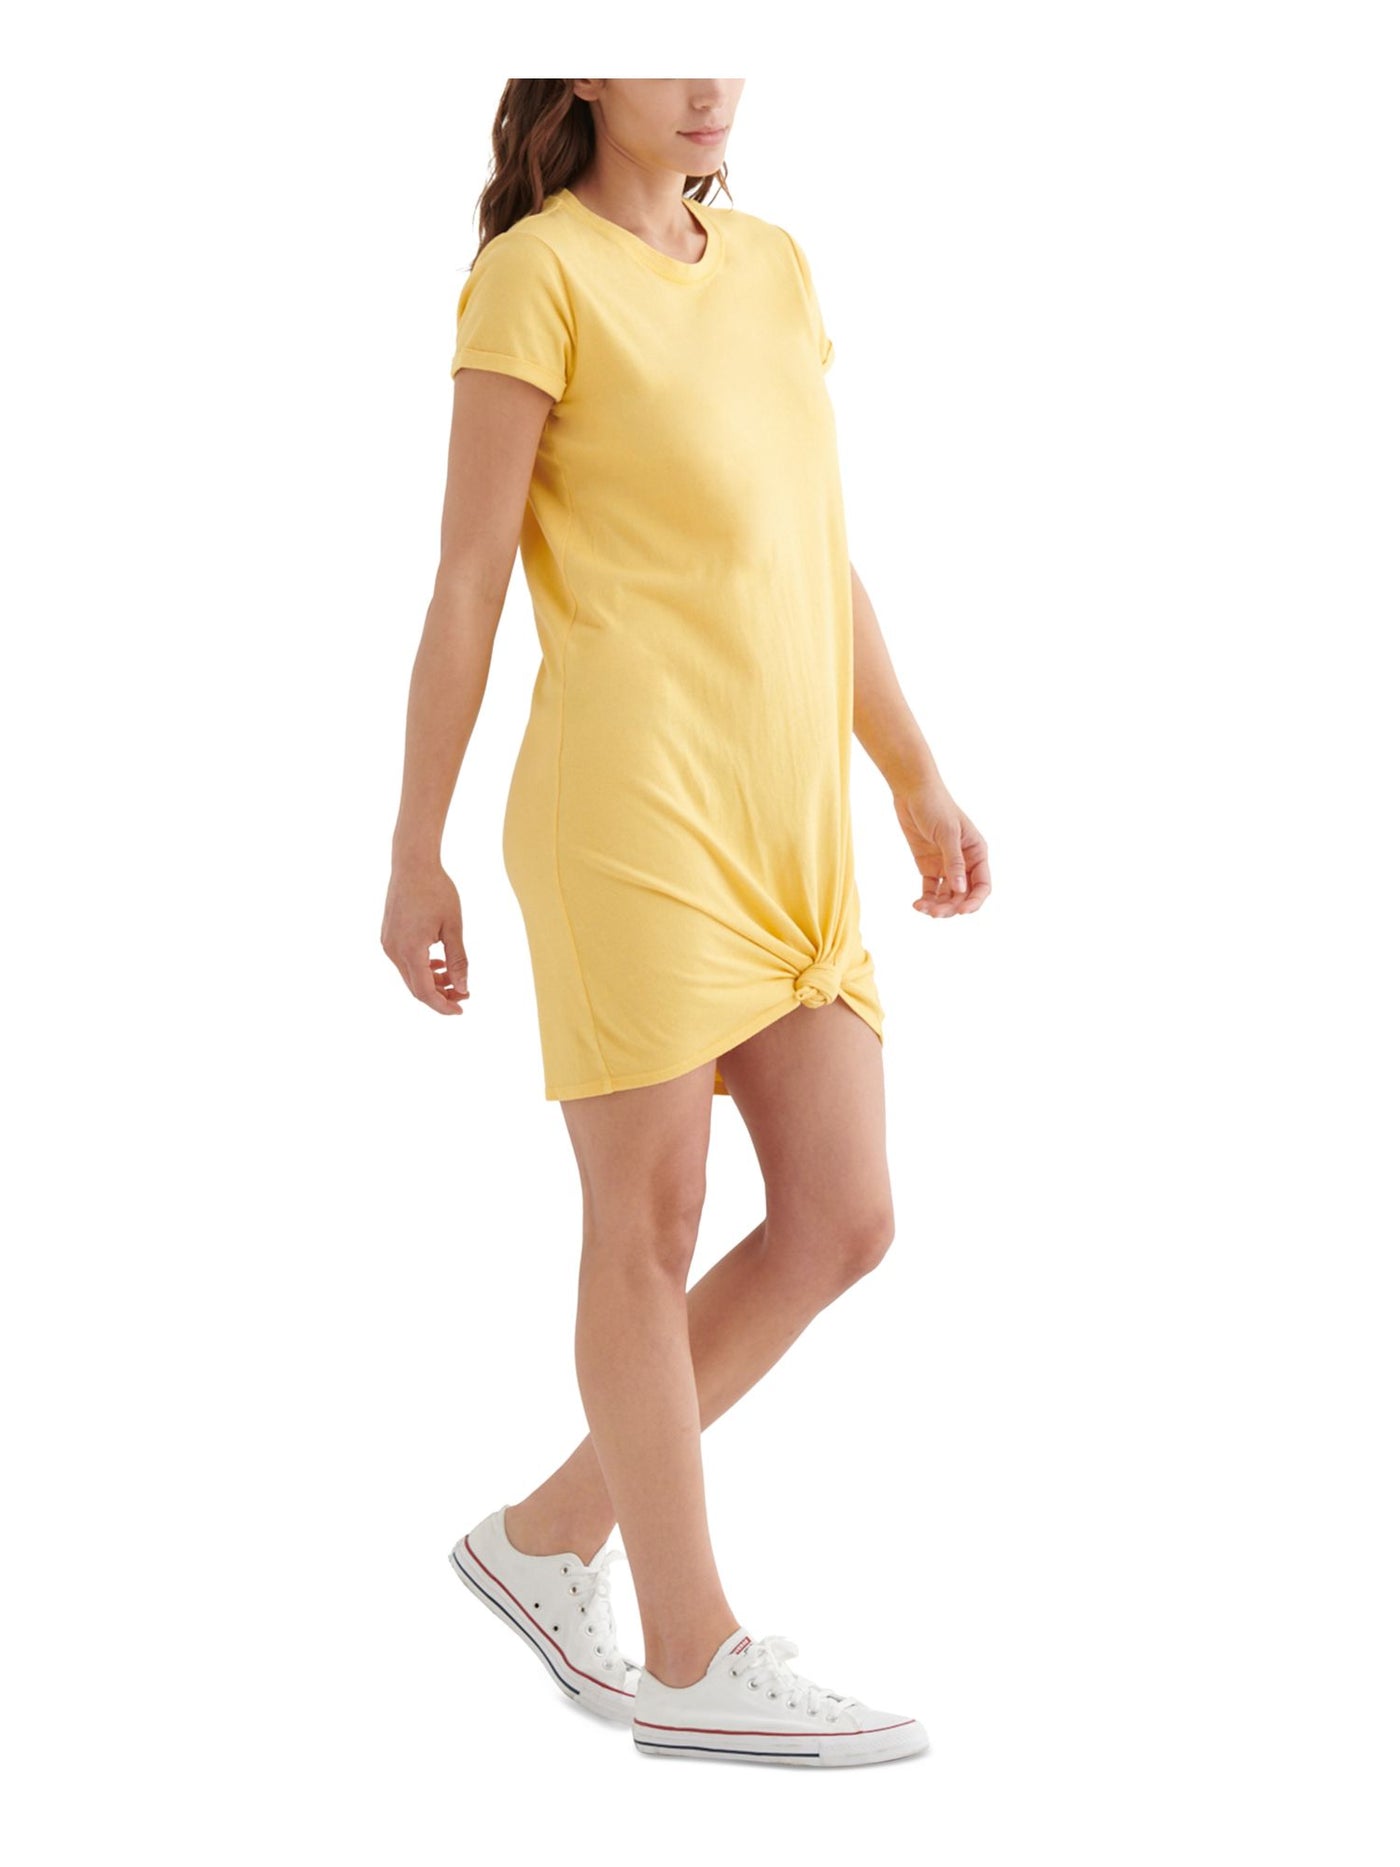 LUCKY BRAND Womens Yellow Short Sleeve Crew Neck Above The Knee T-Shirt Dress M